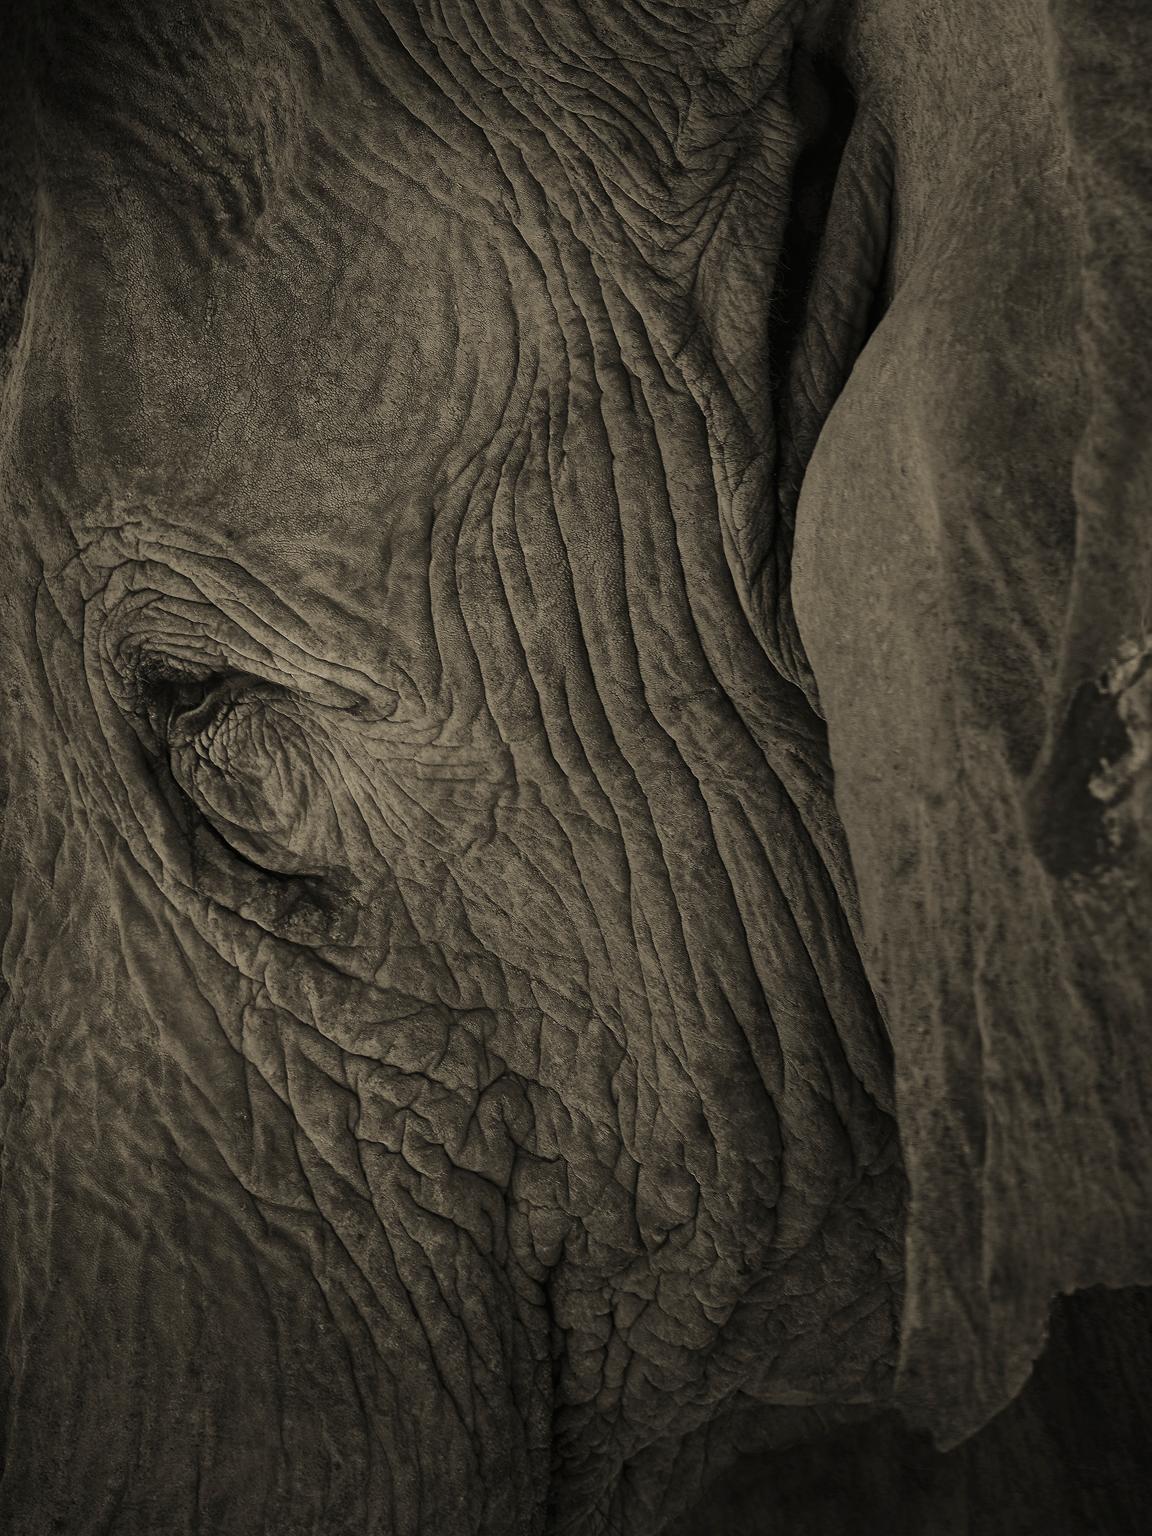 Elephant No. 3 - Black Black and White Photograph by Chris Gordaneer